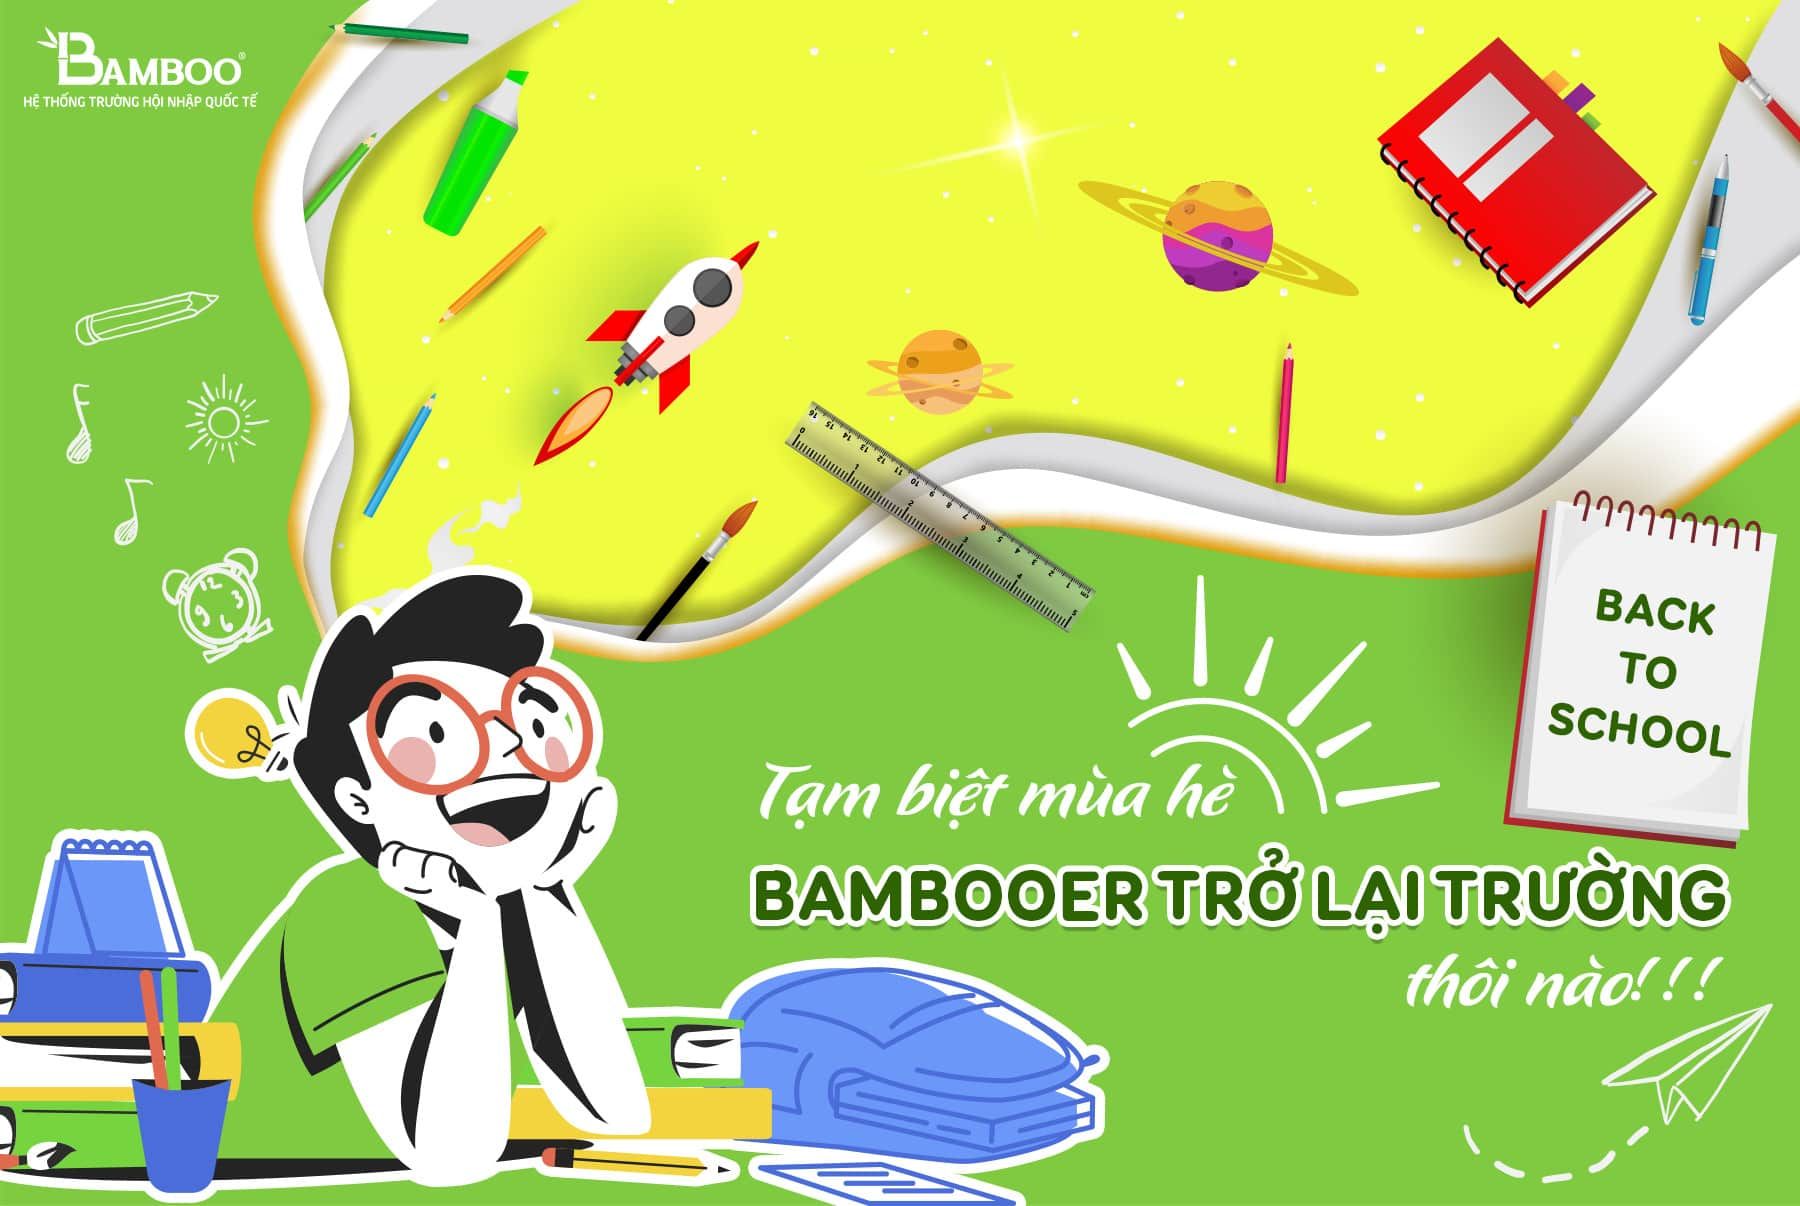 Bambooer thao tác học online